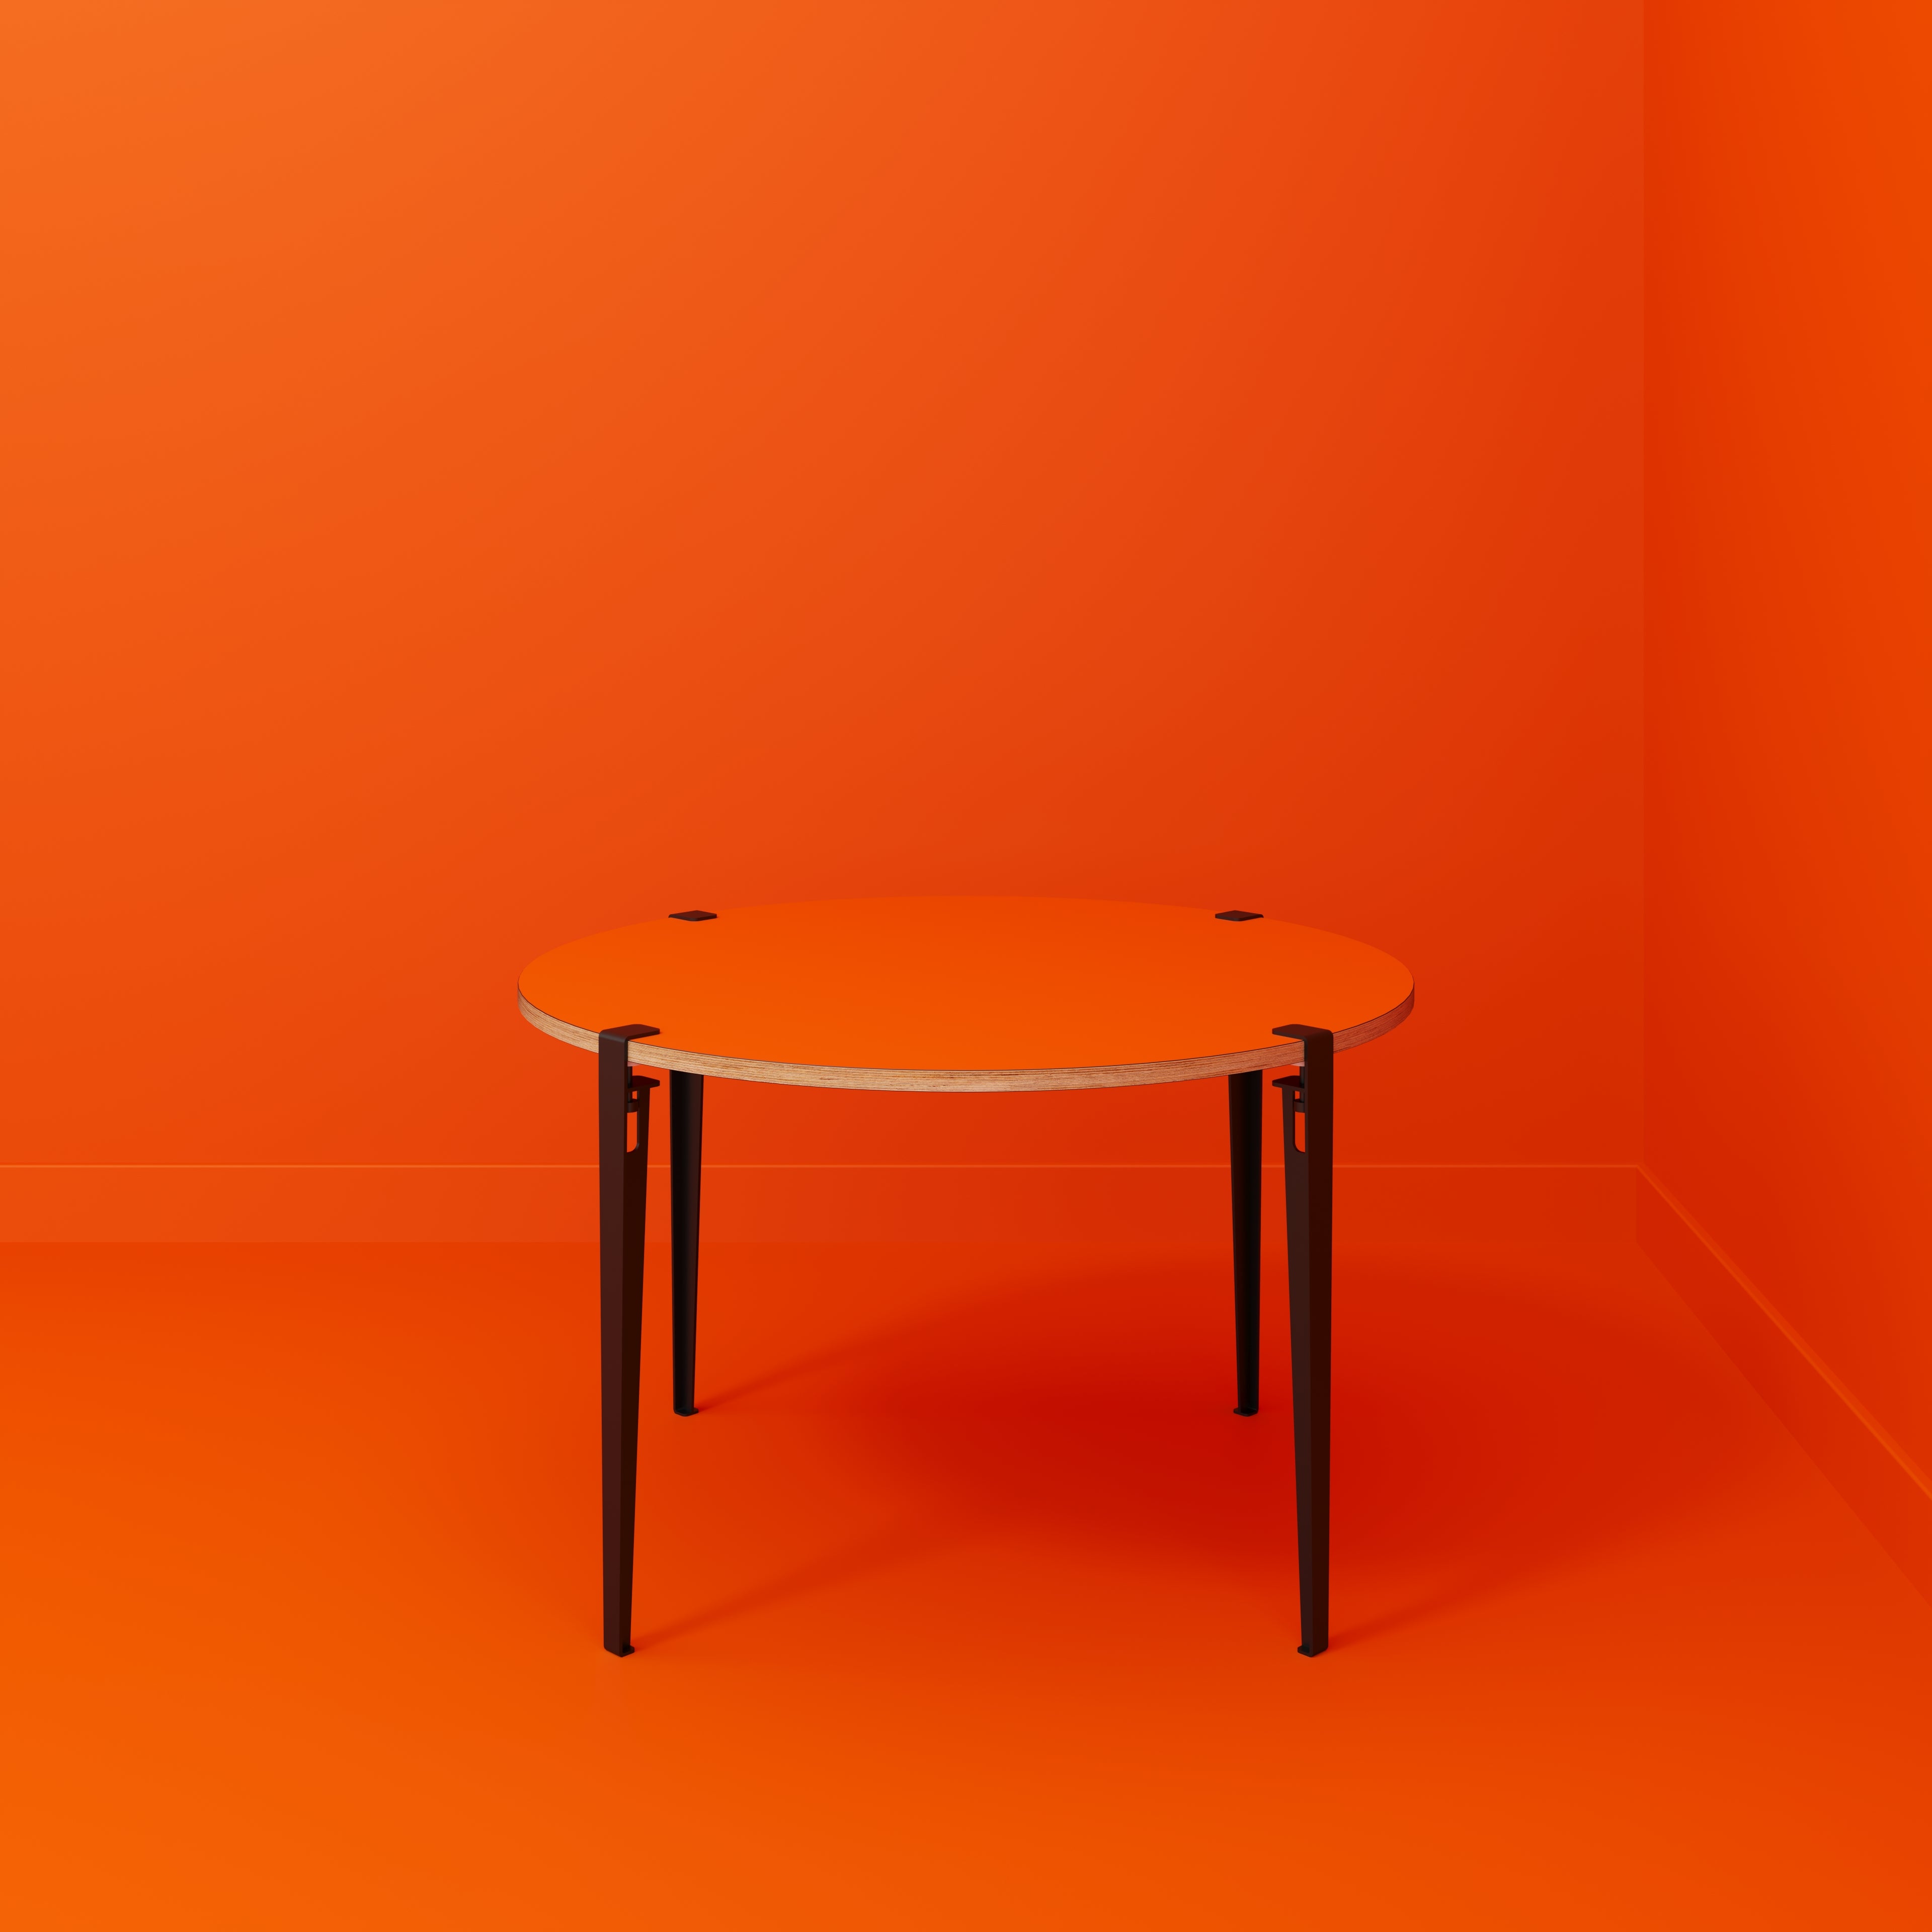 Round Table with Black Tiptoe Legs - Formica Levante Orange - 1200(dia) x 750(h)